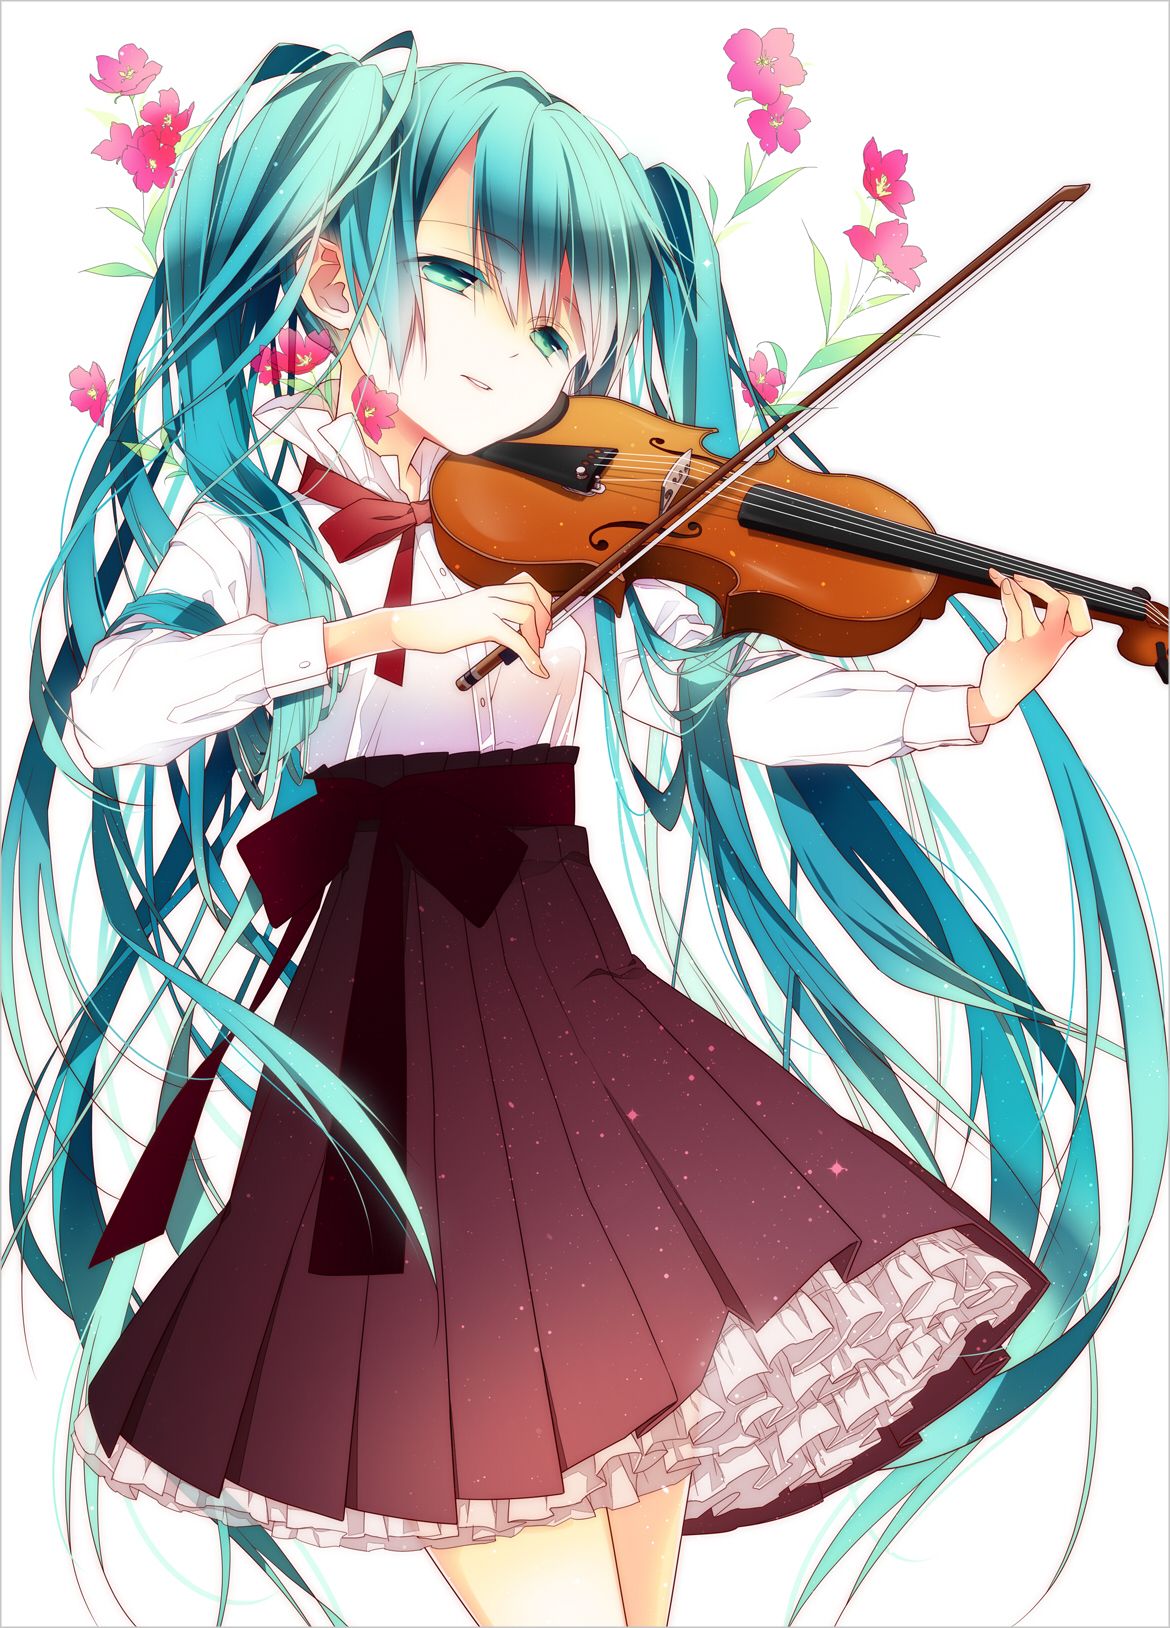 Playing Violin Anime Image Board